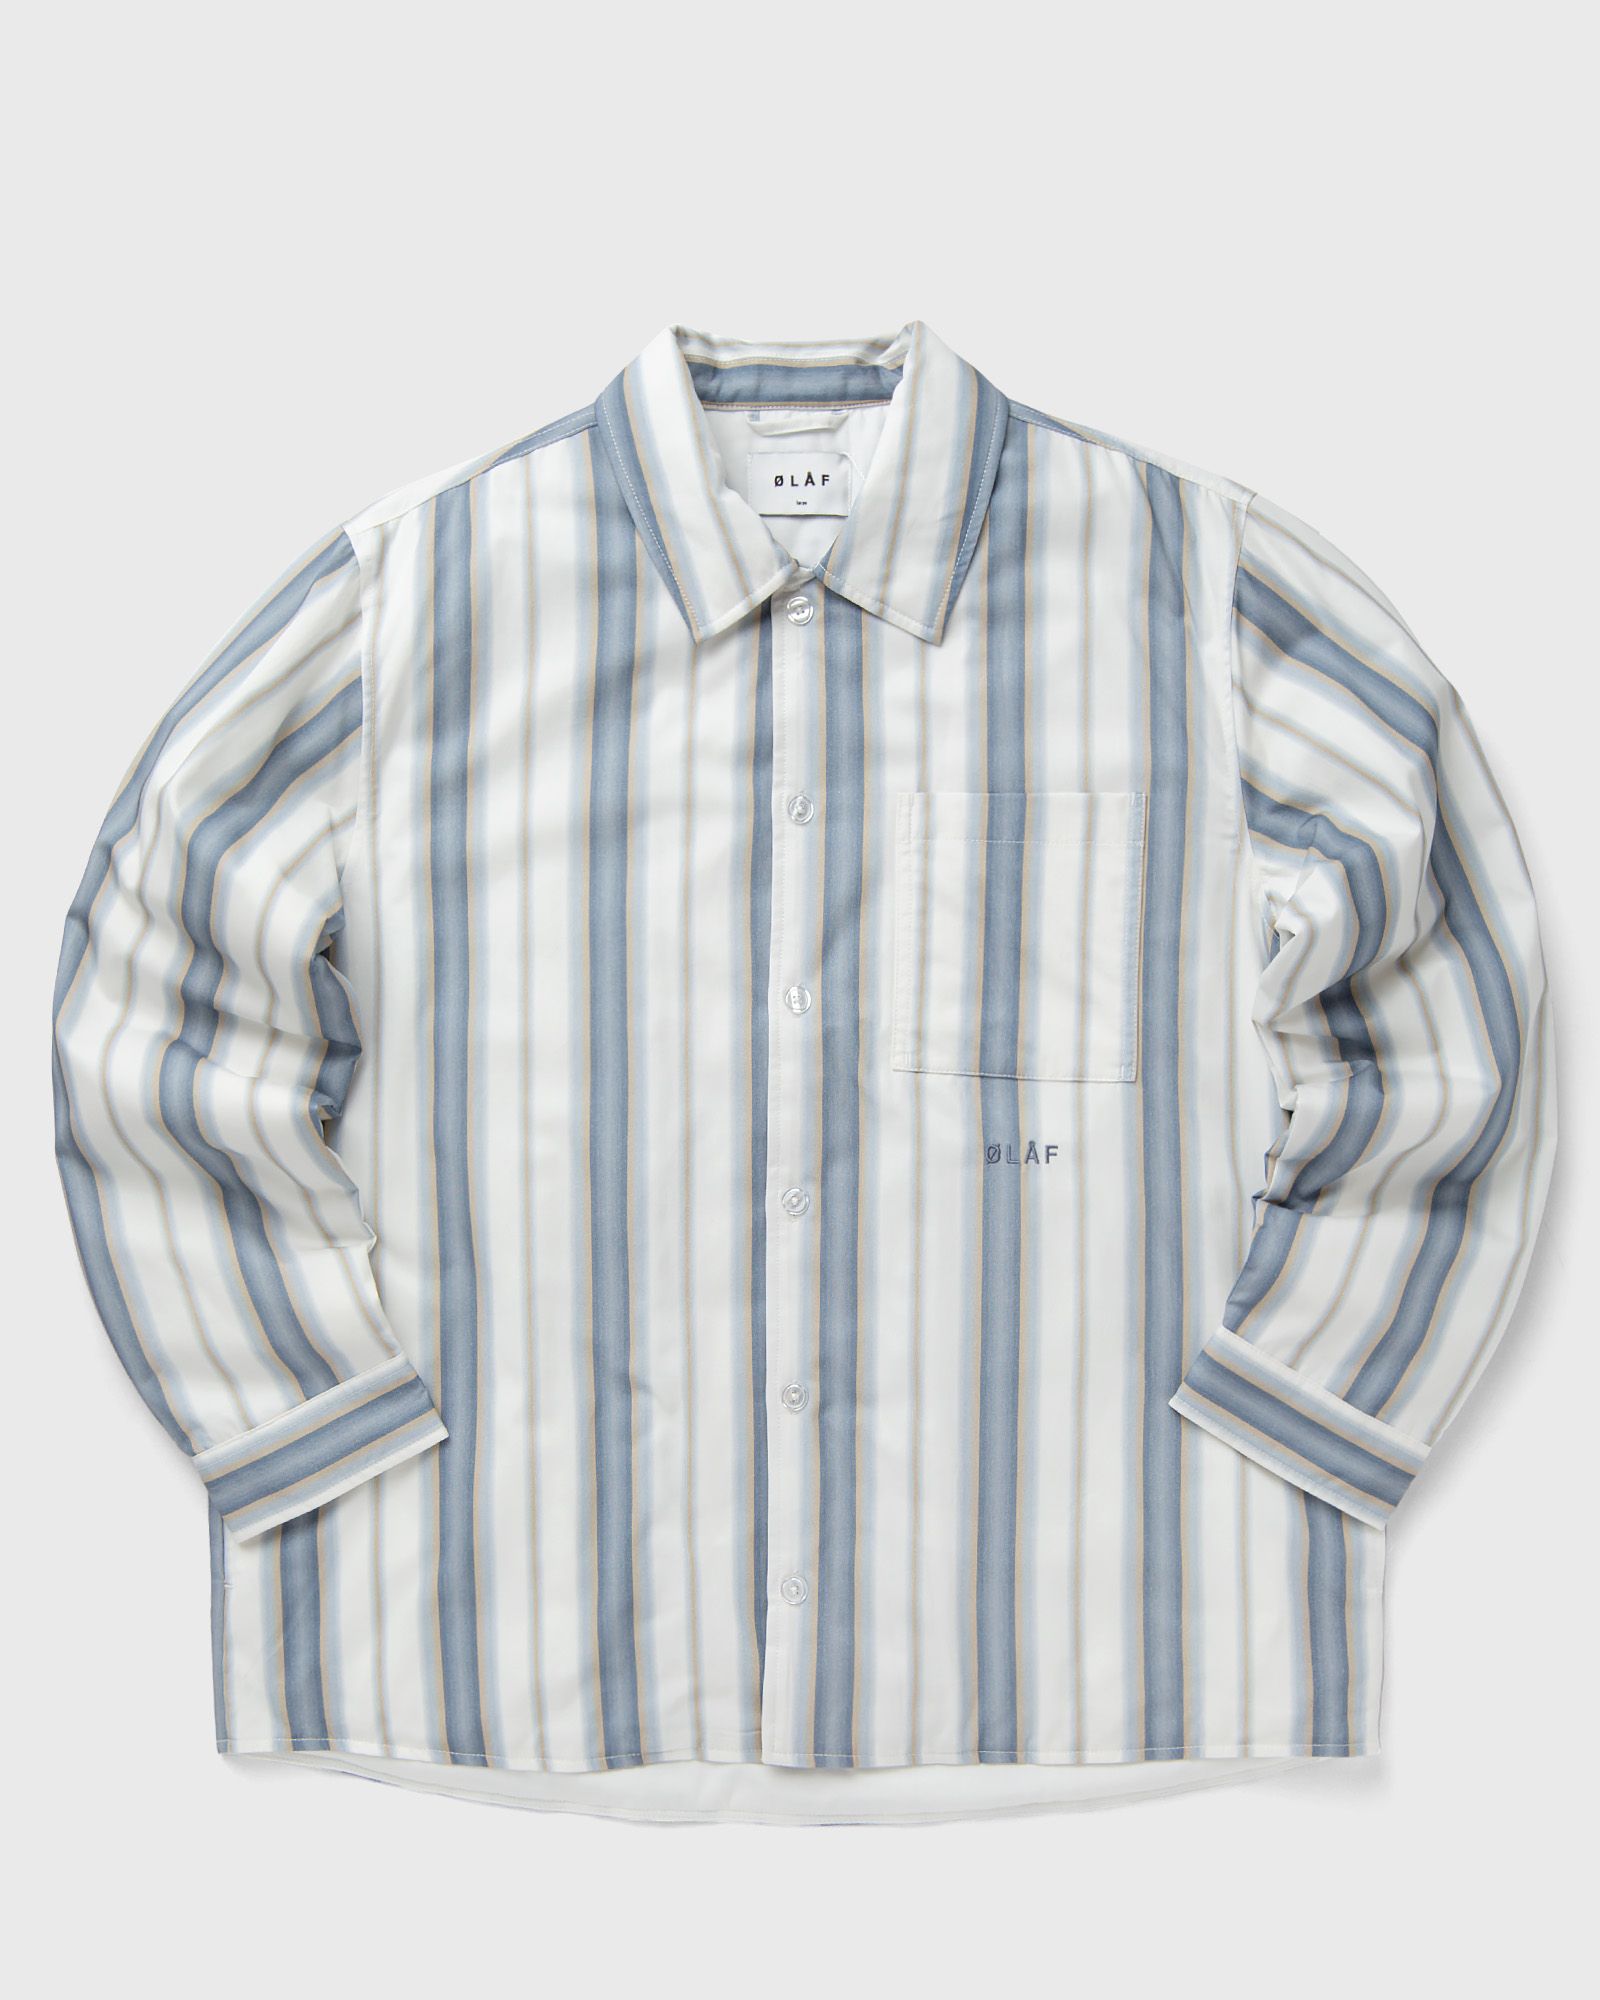 ØLÅF - padded stripe overshirt men overshirts blue|white in größe:l